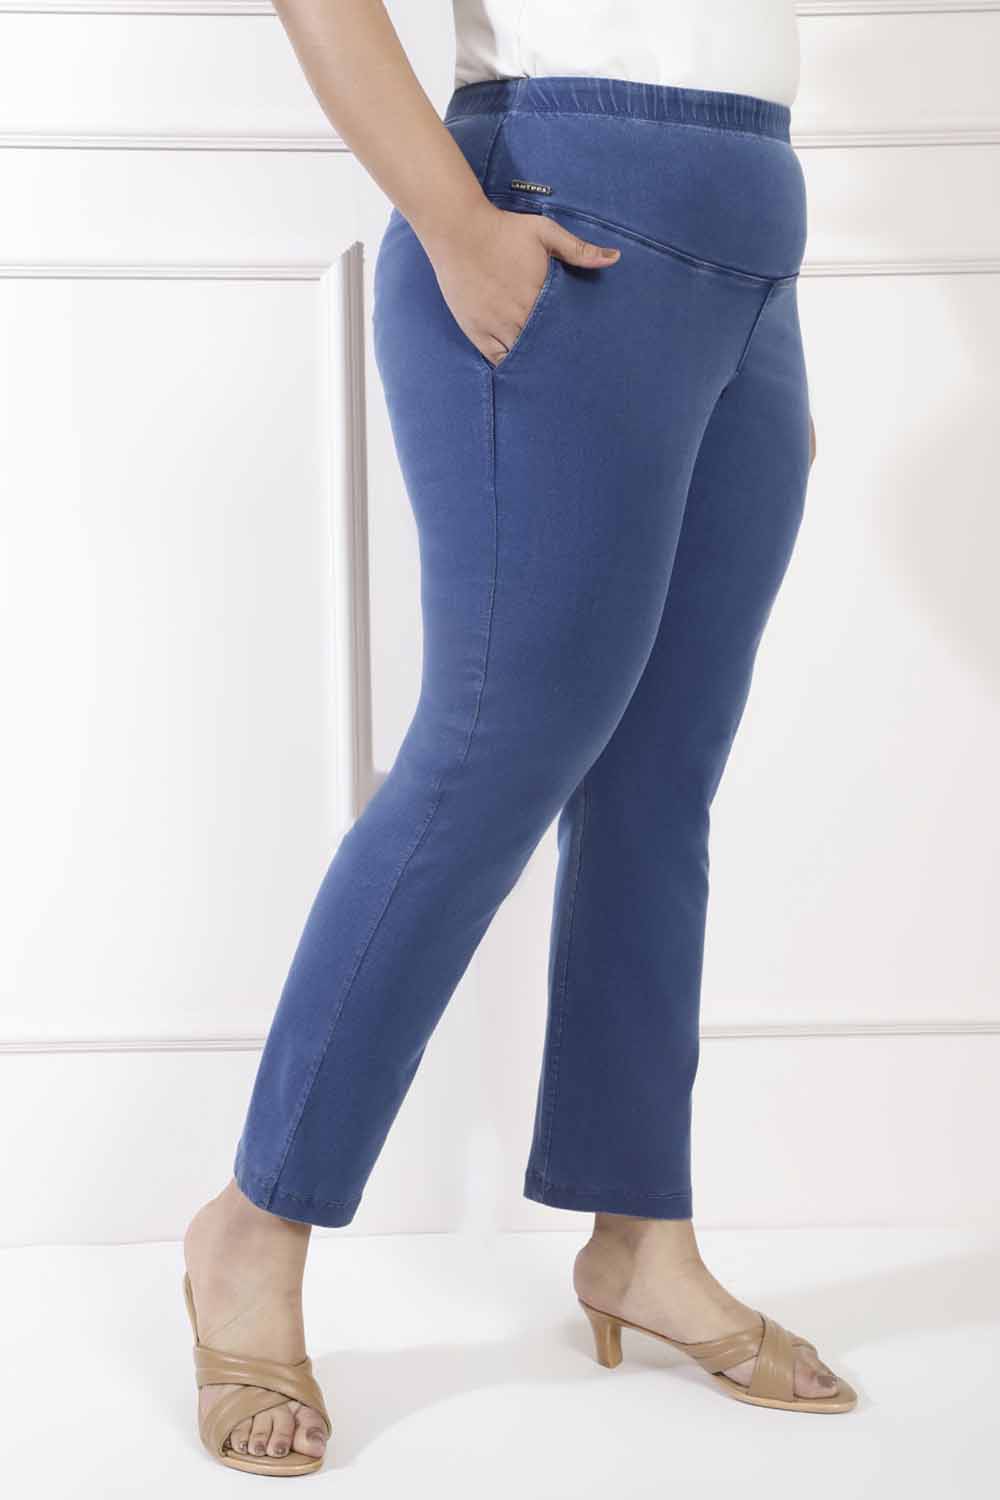 Bermuda Blue No Fade Straight Jeans for Women